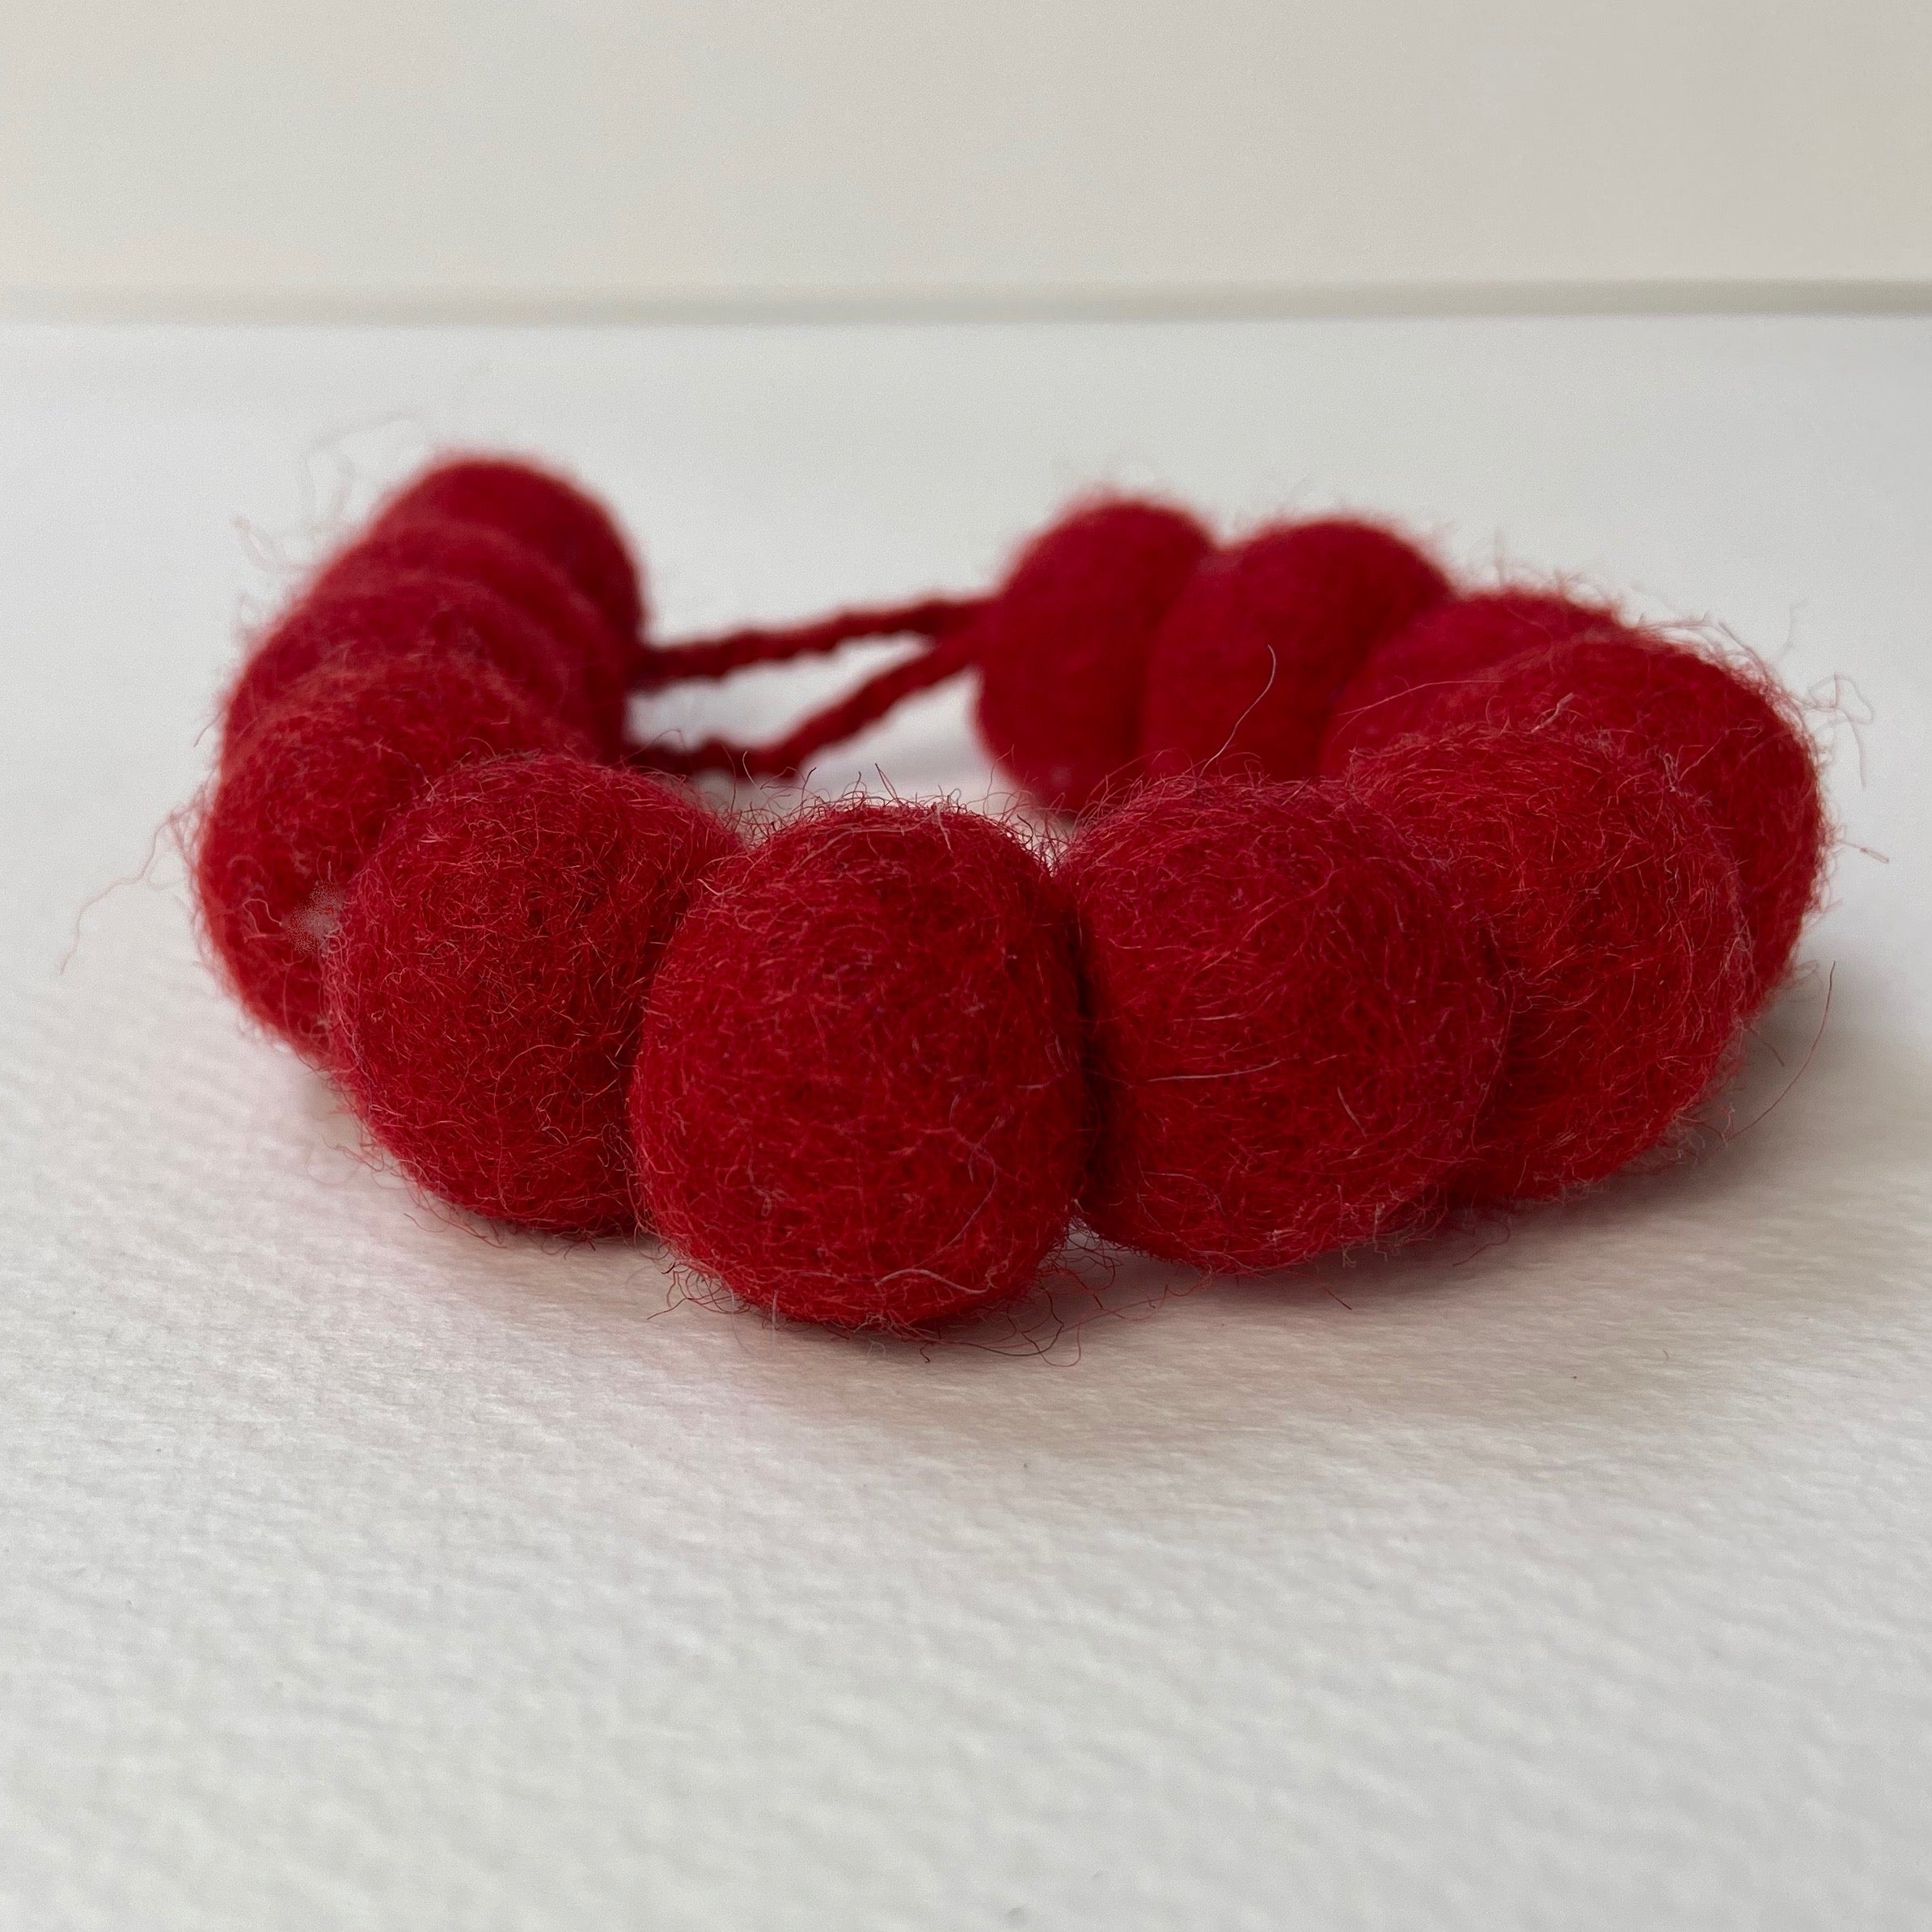 Bracelet of Red Felt Balls - The Nancy Smillie Shop - Art, Jewellery & Designer Gifts Glasgow